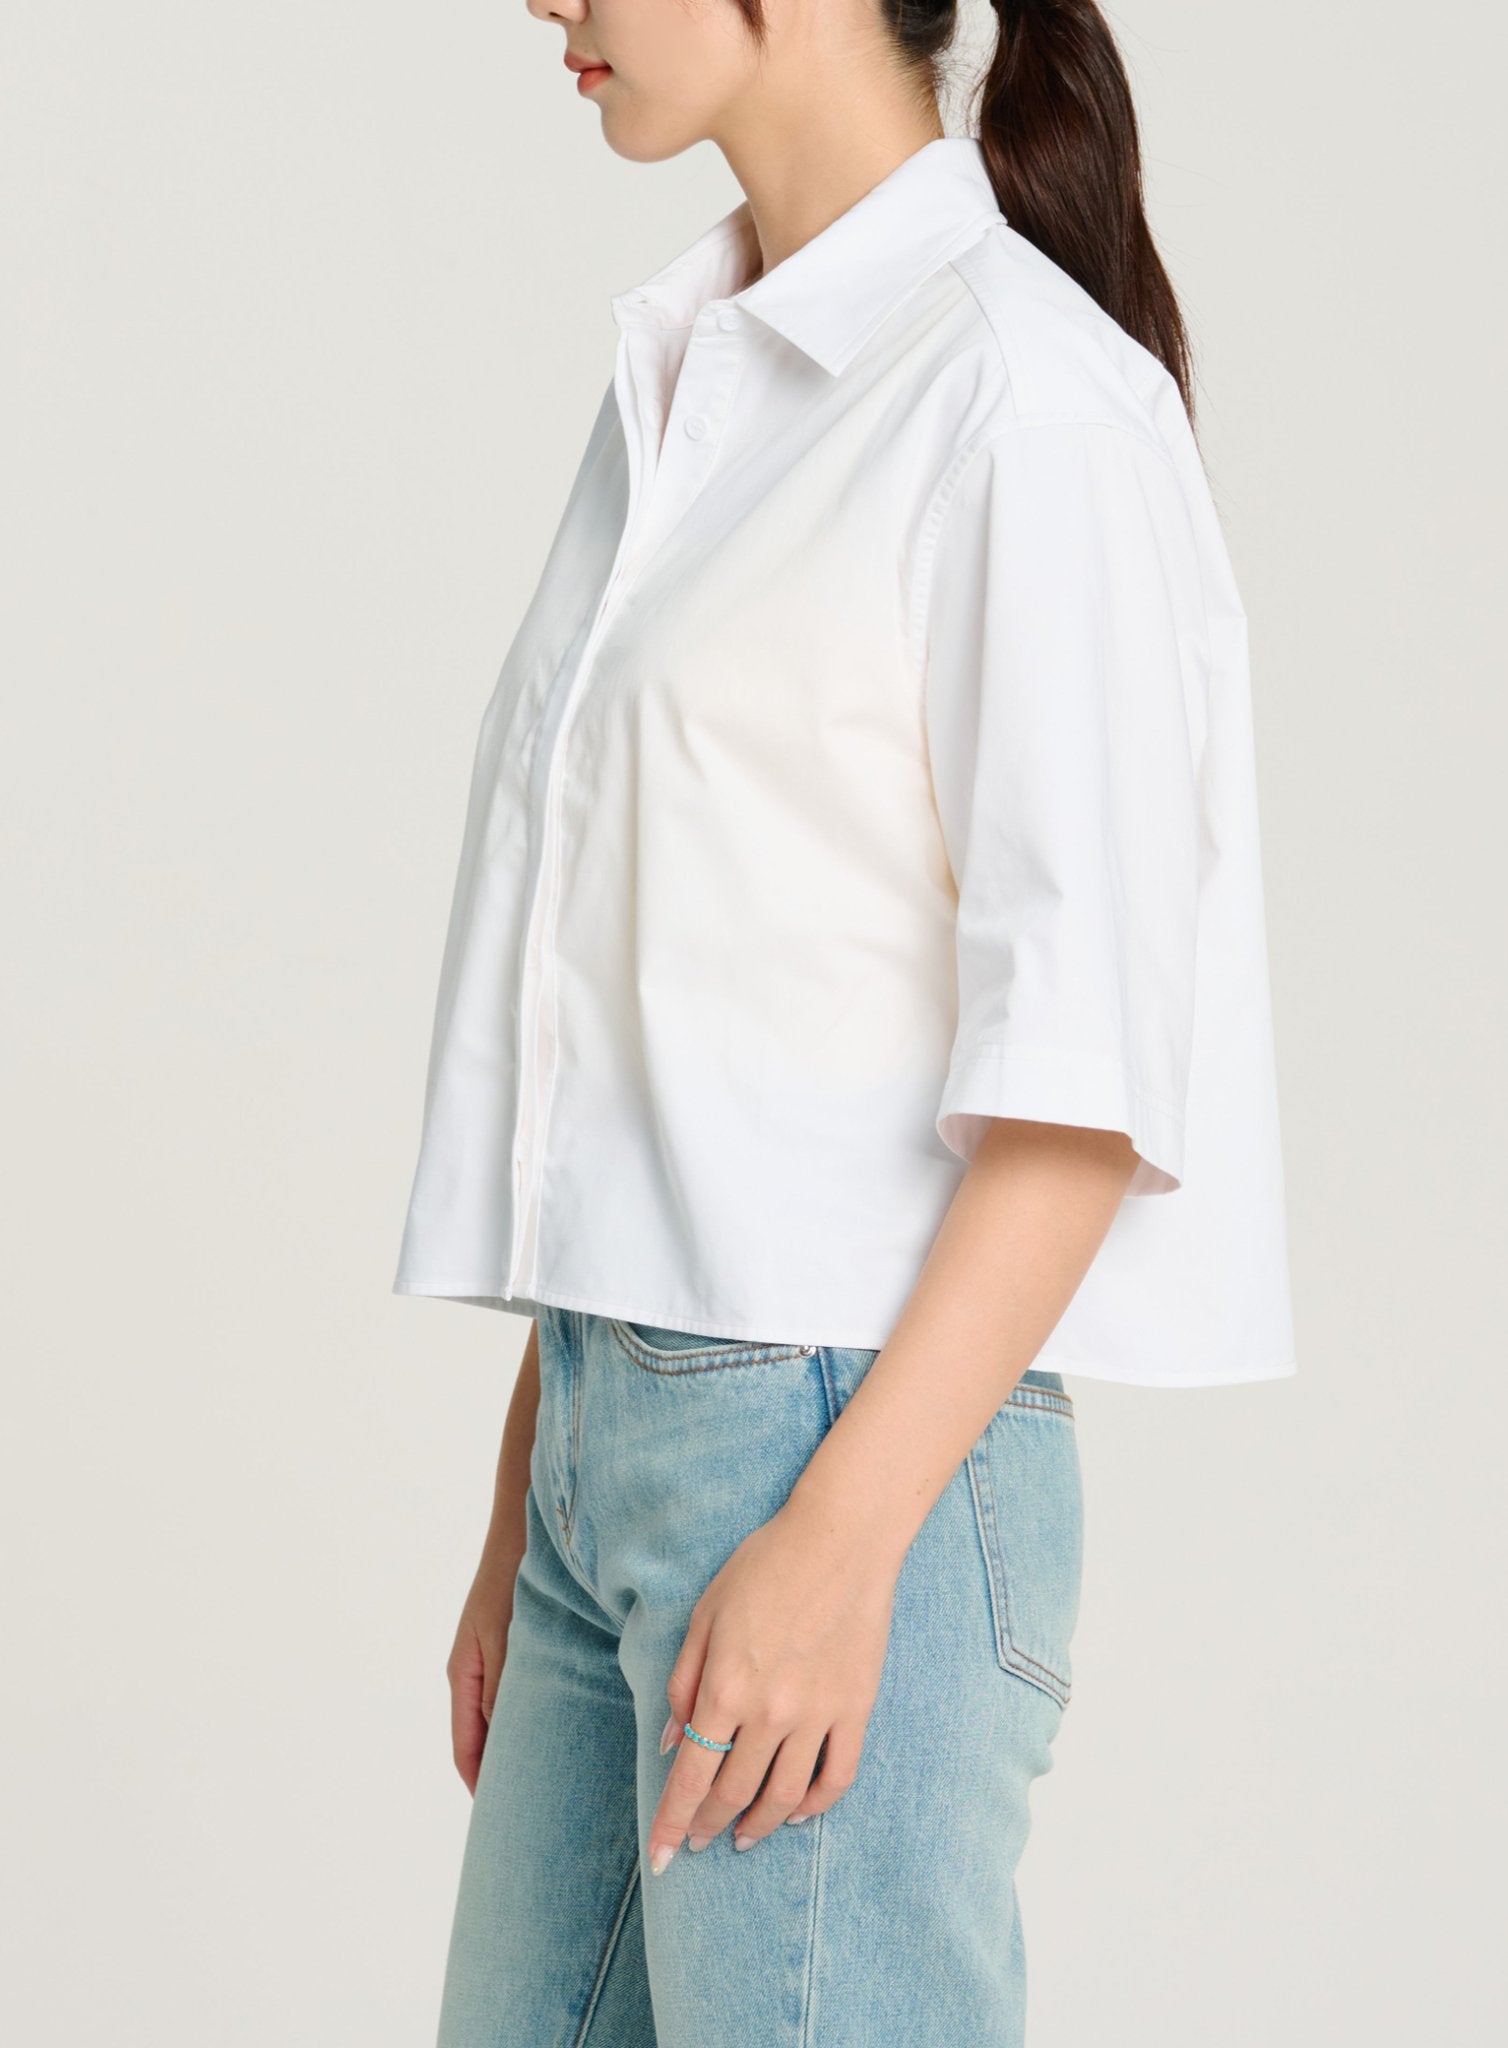 ELENA short sleeved shirt (White) - STELLAM